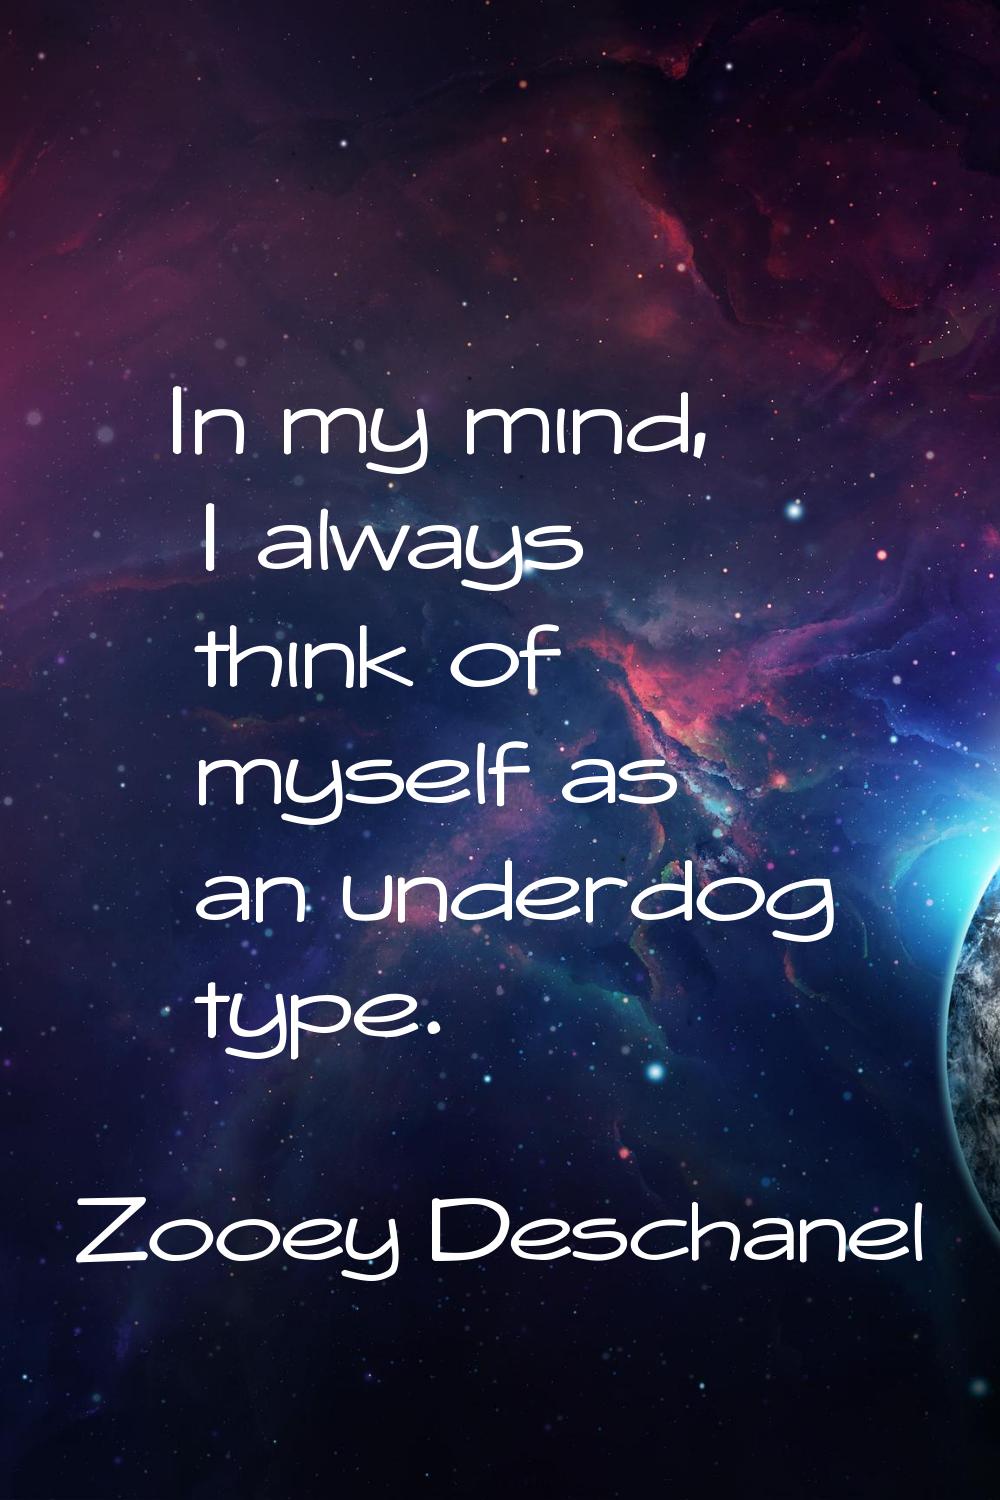 In my mind, I always think of myself as an underdog type.